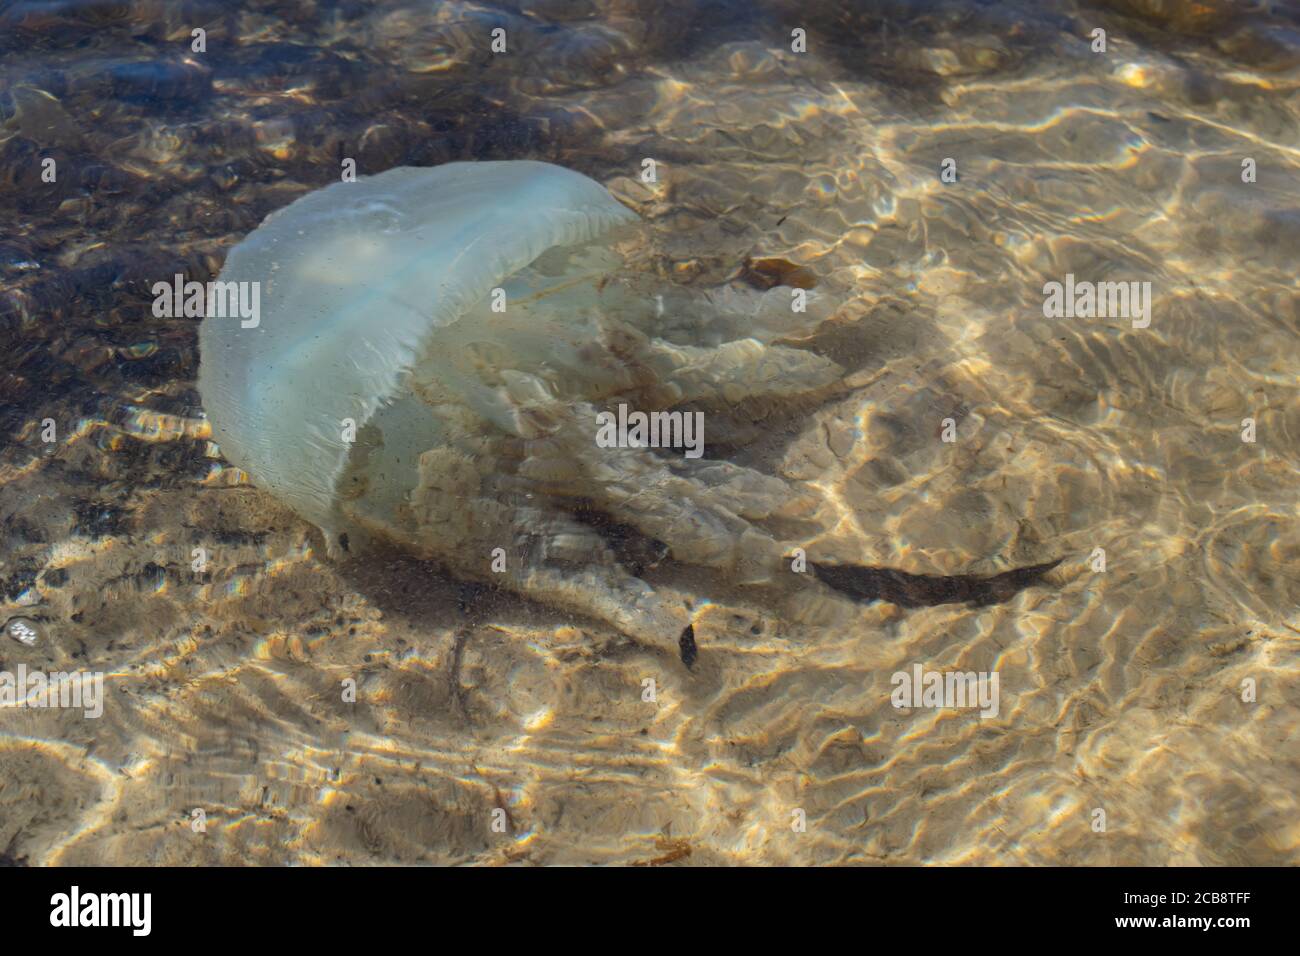 Full scene, huge Jellyfish under water sea and sand background Stock Photo